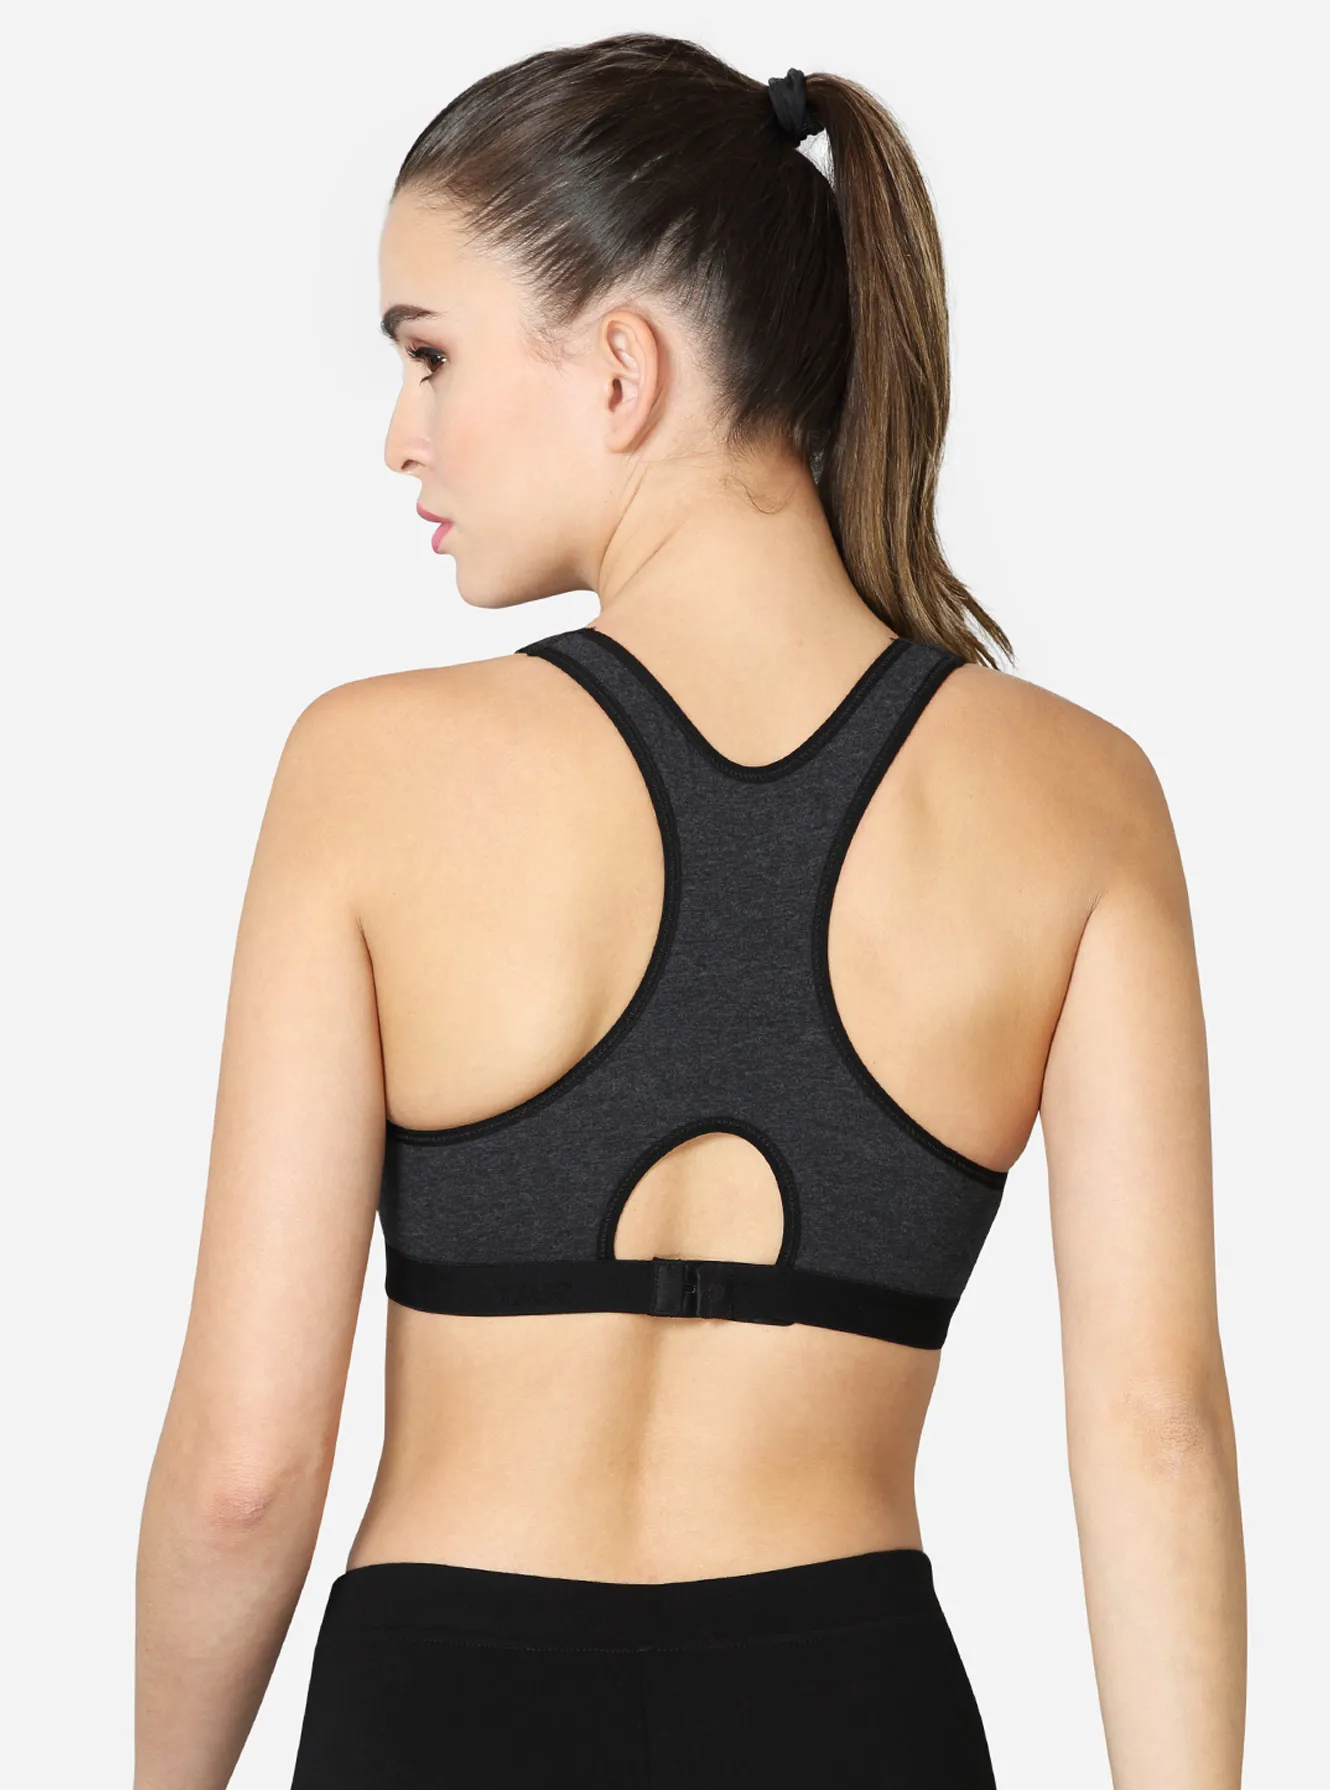 ALL ACCESS Neon stretch sports bra